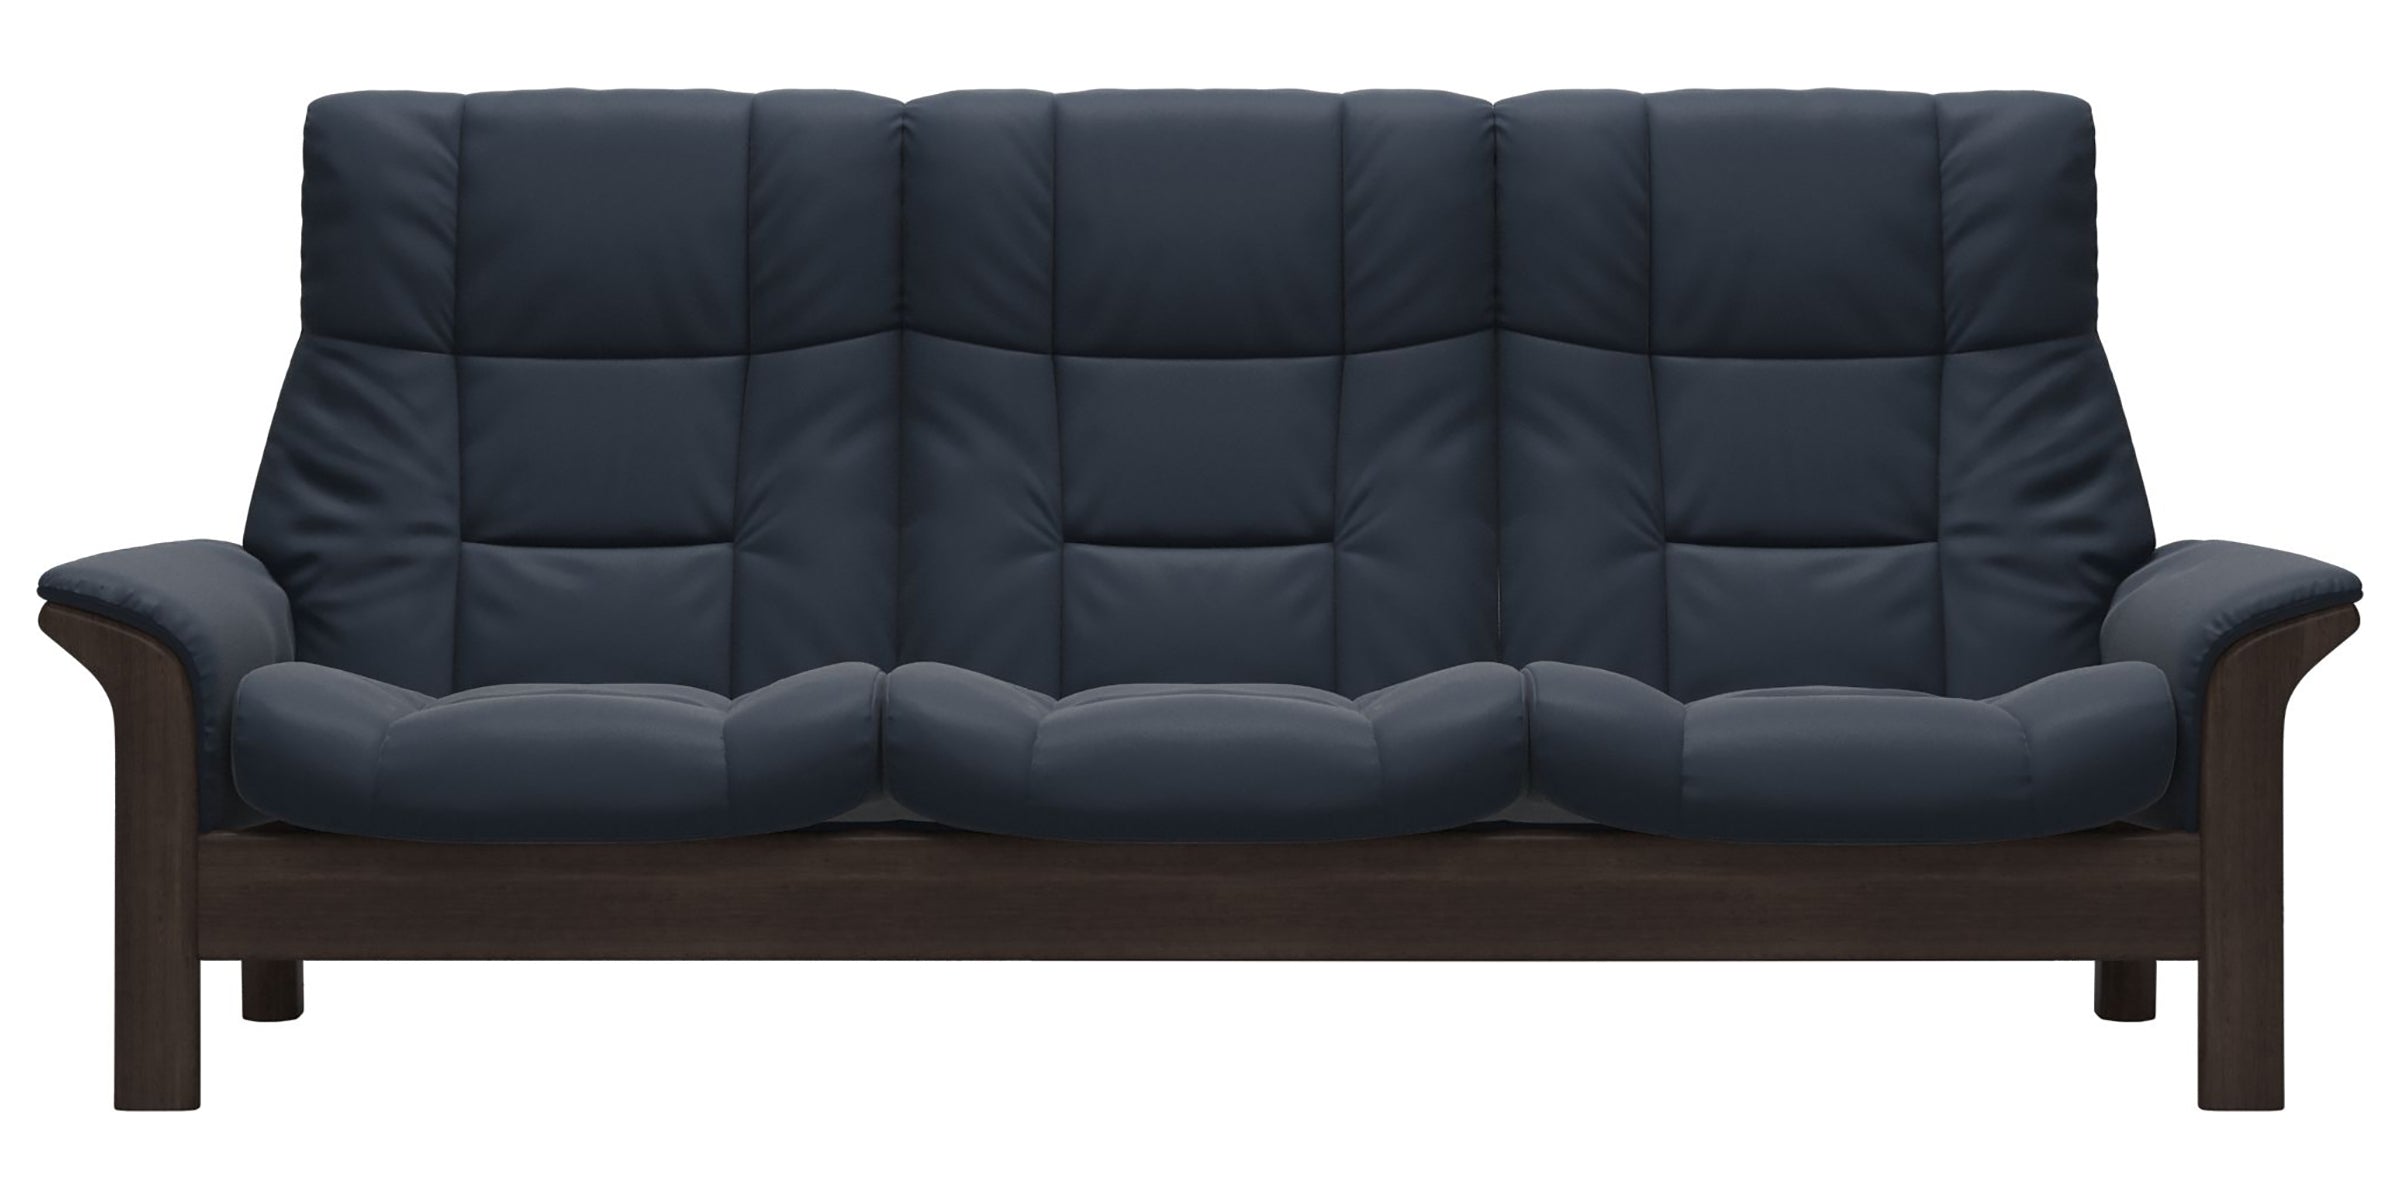 Paloma Leather Oxford Blue and Wenge Base | Stressless Buckingham 3-Seater High Back Sofa | Valley Ridge Furniture